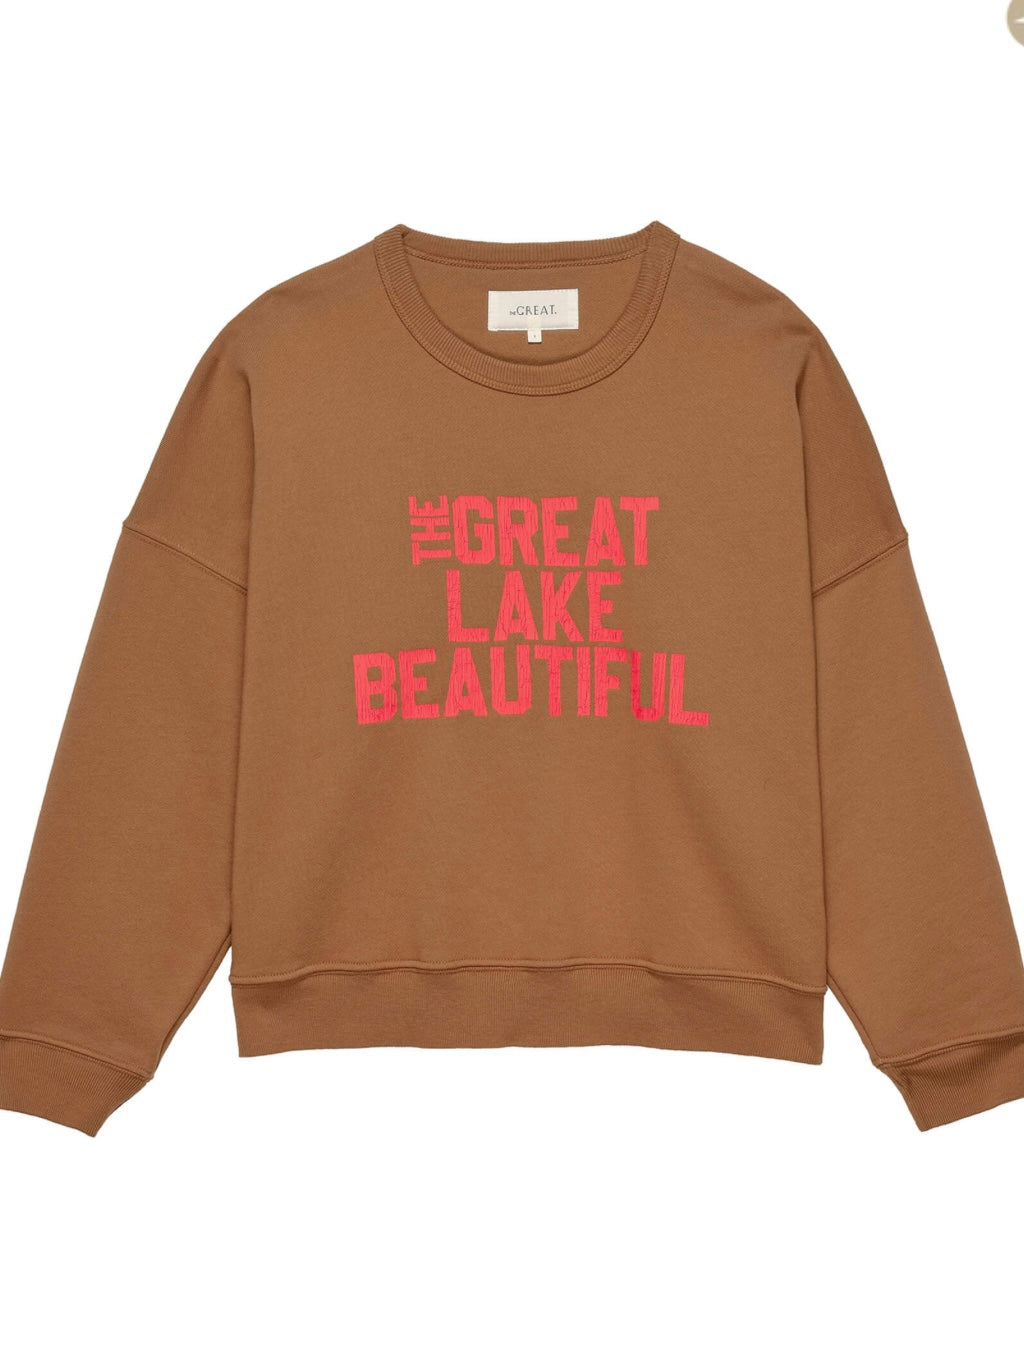 The Great - Bright Maple The Great Beautiful Lake Sweatshirt